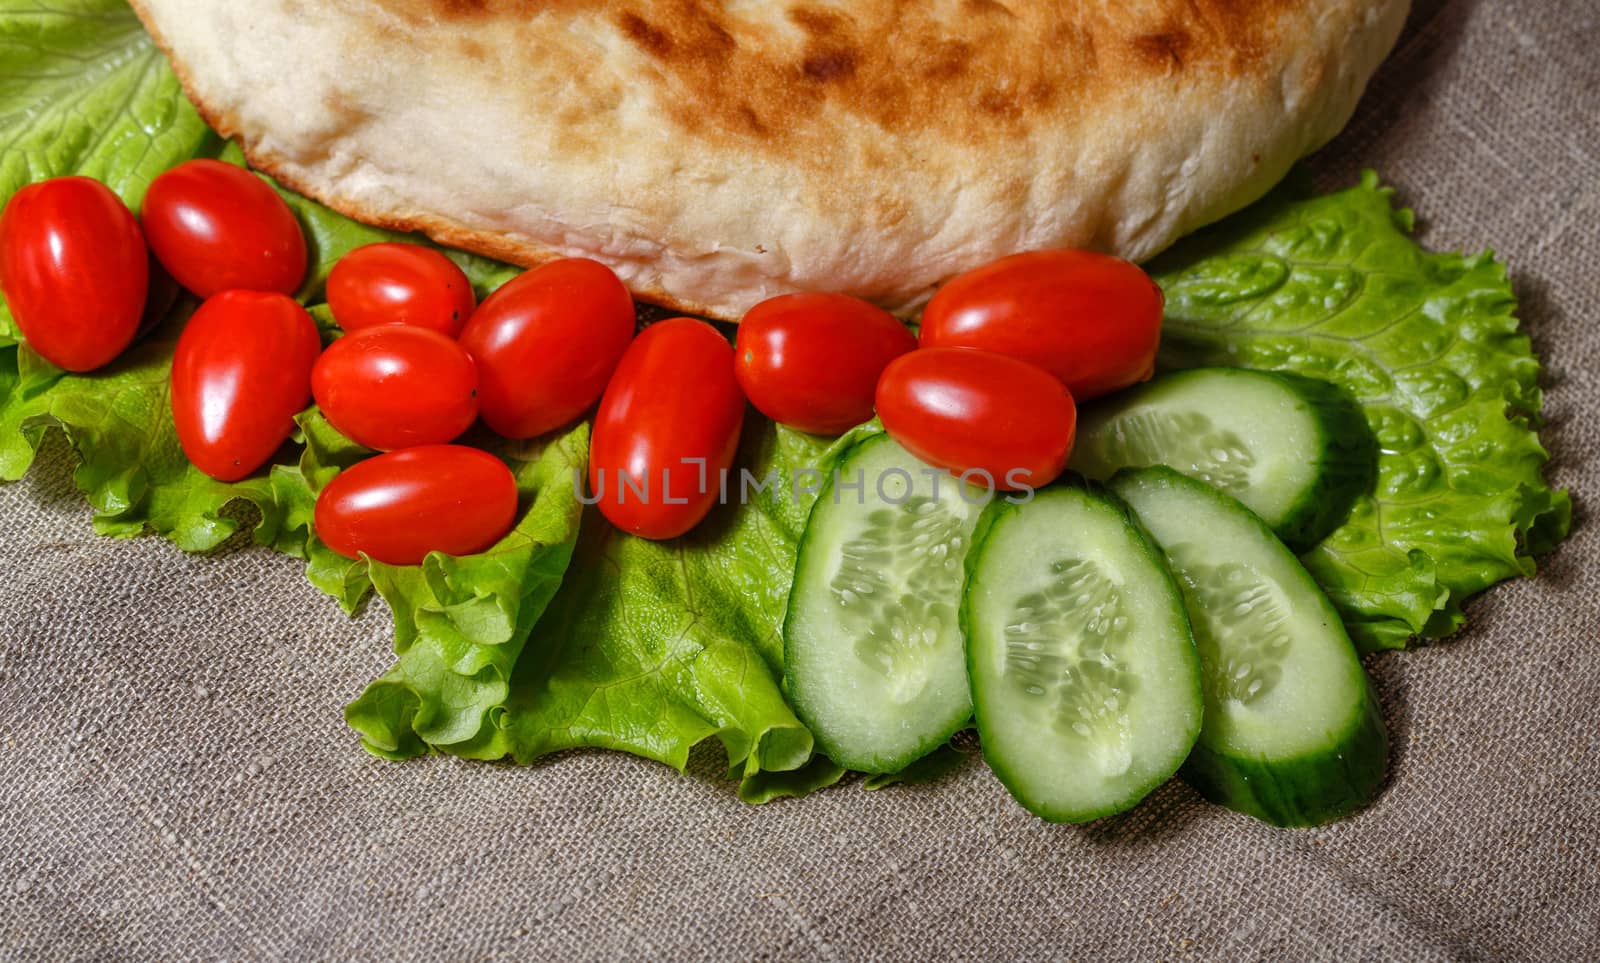 Pita bread and vegetables by Vagengeym